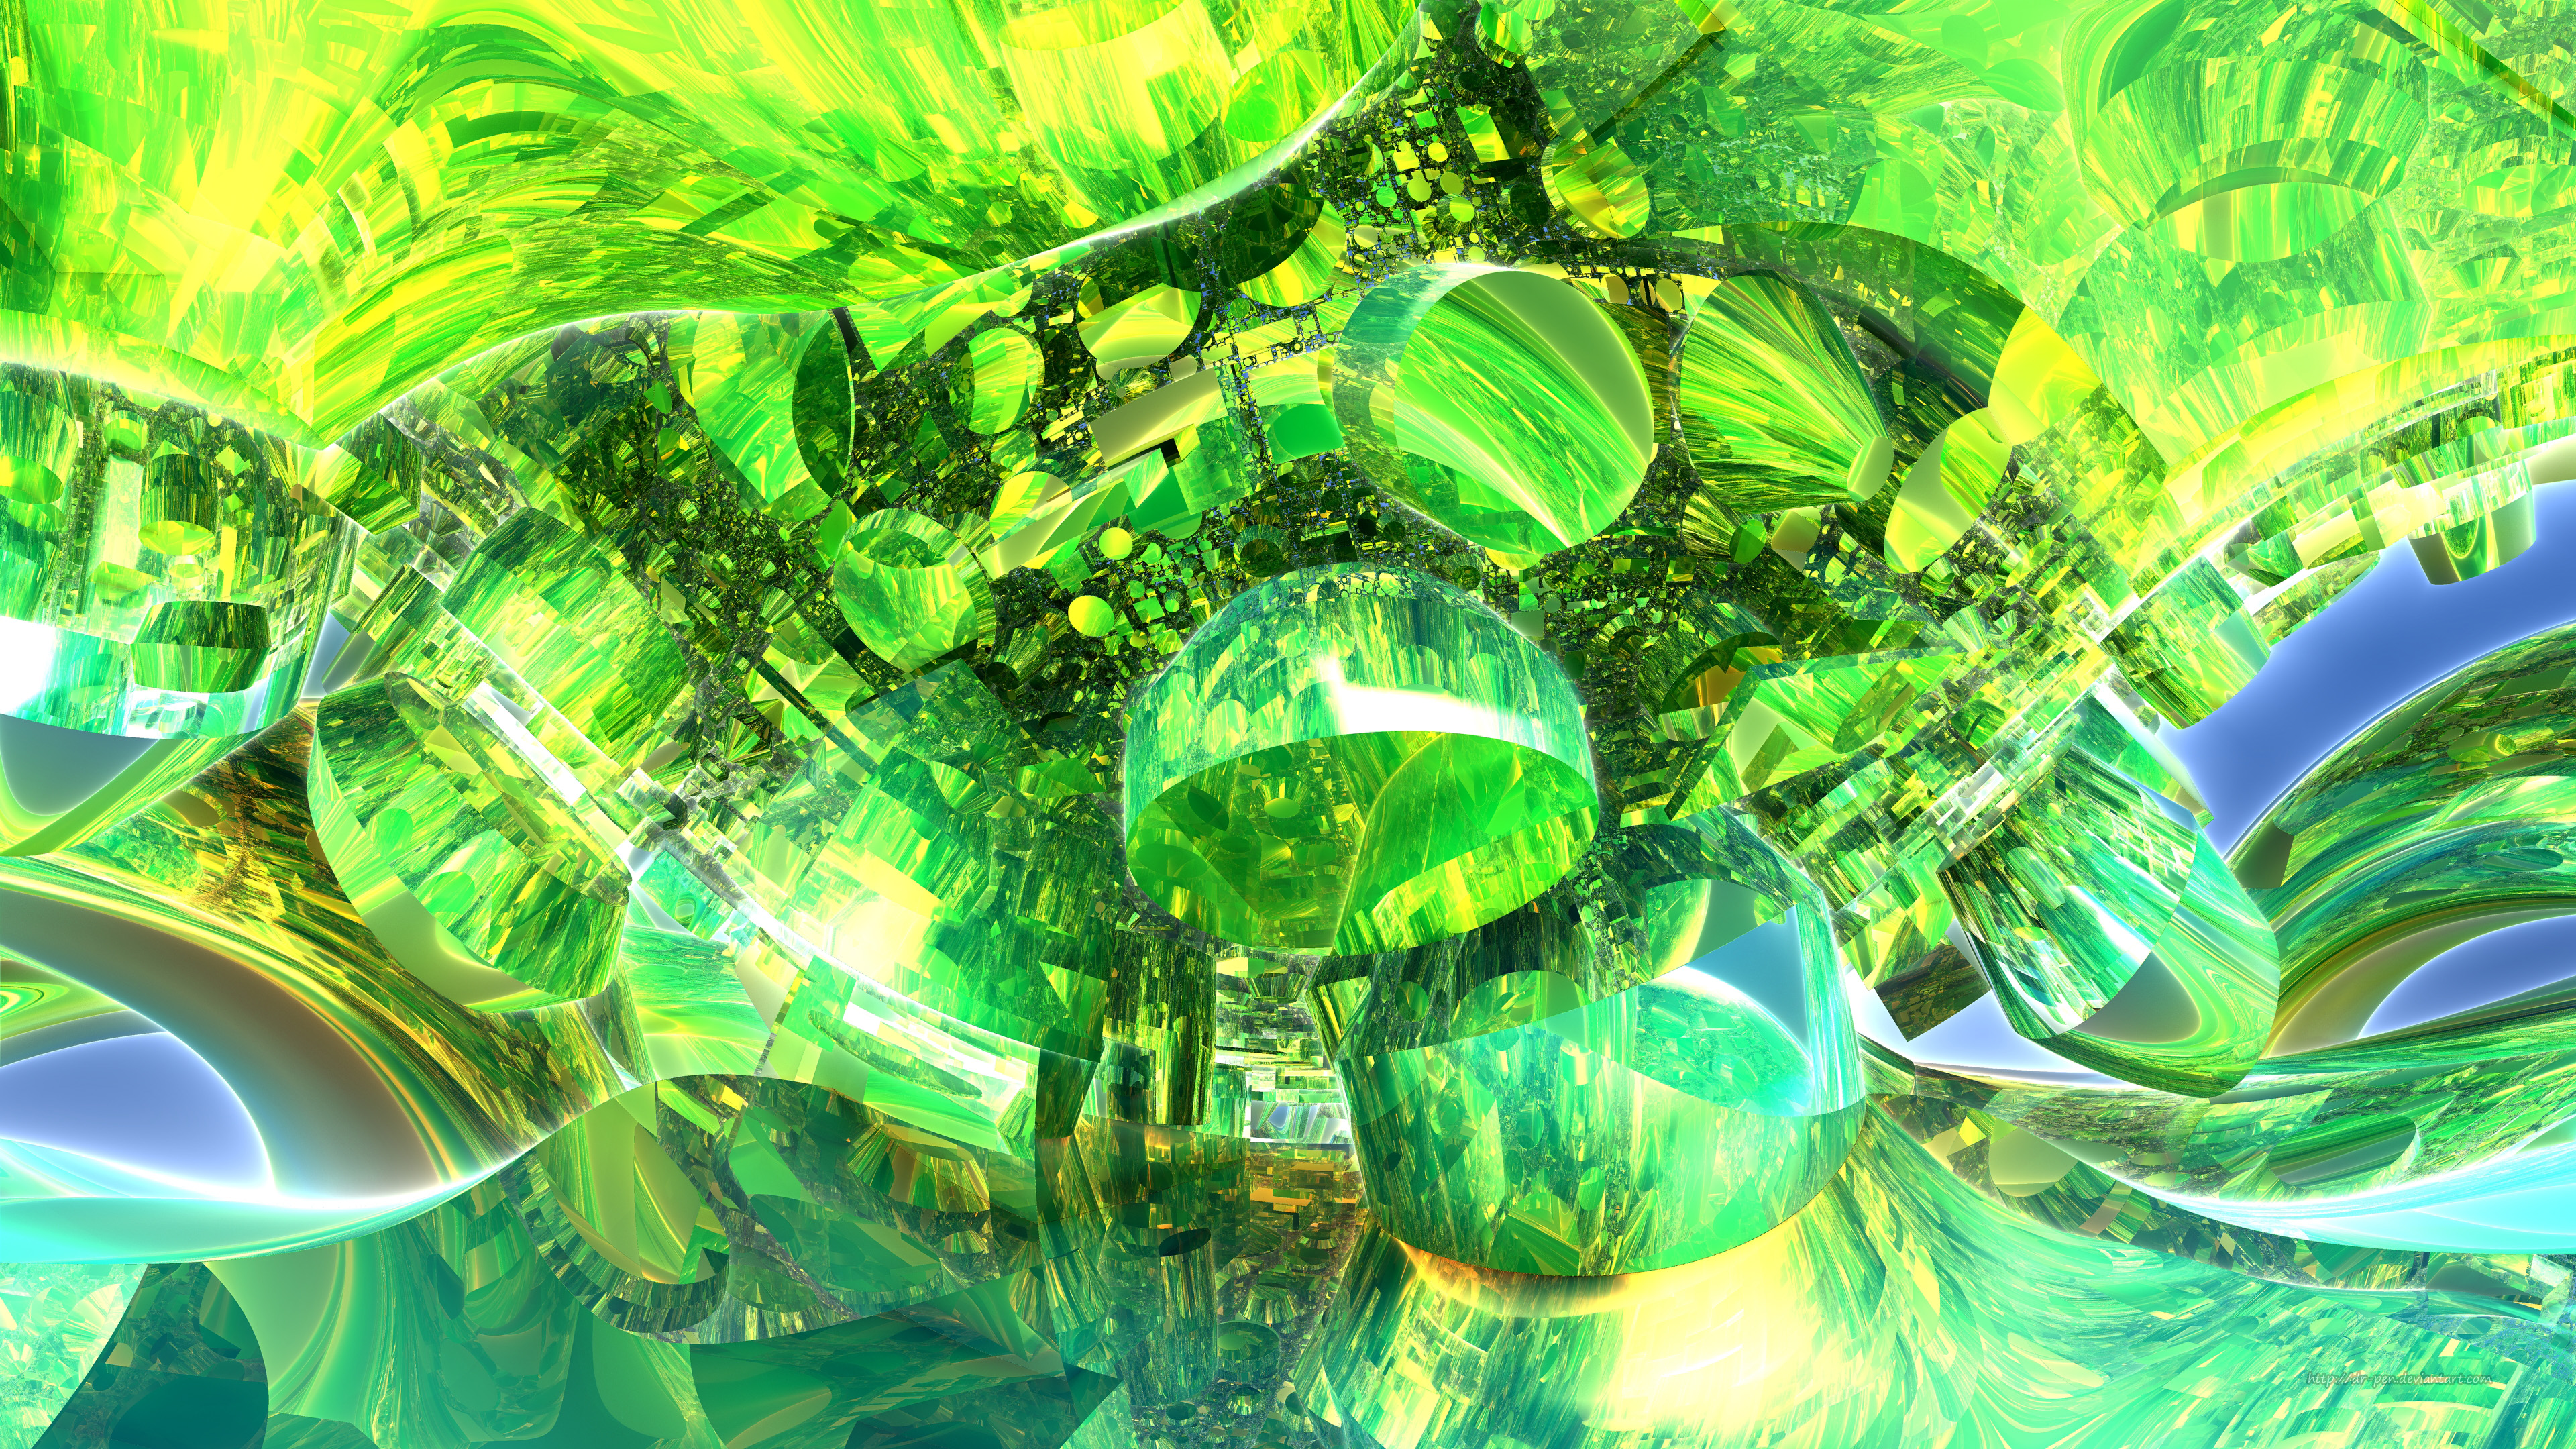 3D Fractal Abstract Artistic Mandelbulb 3D Green Emerald CGi Digital Art Geometry 3840x2160